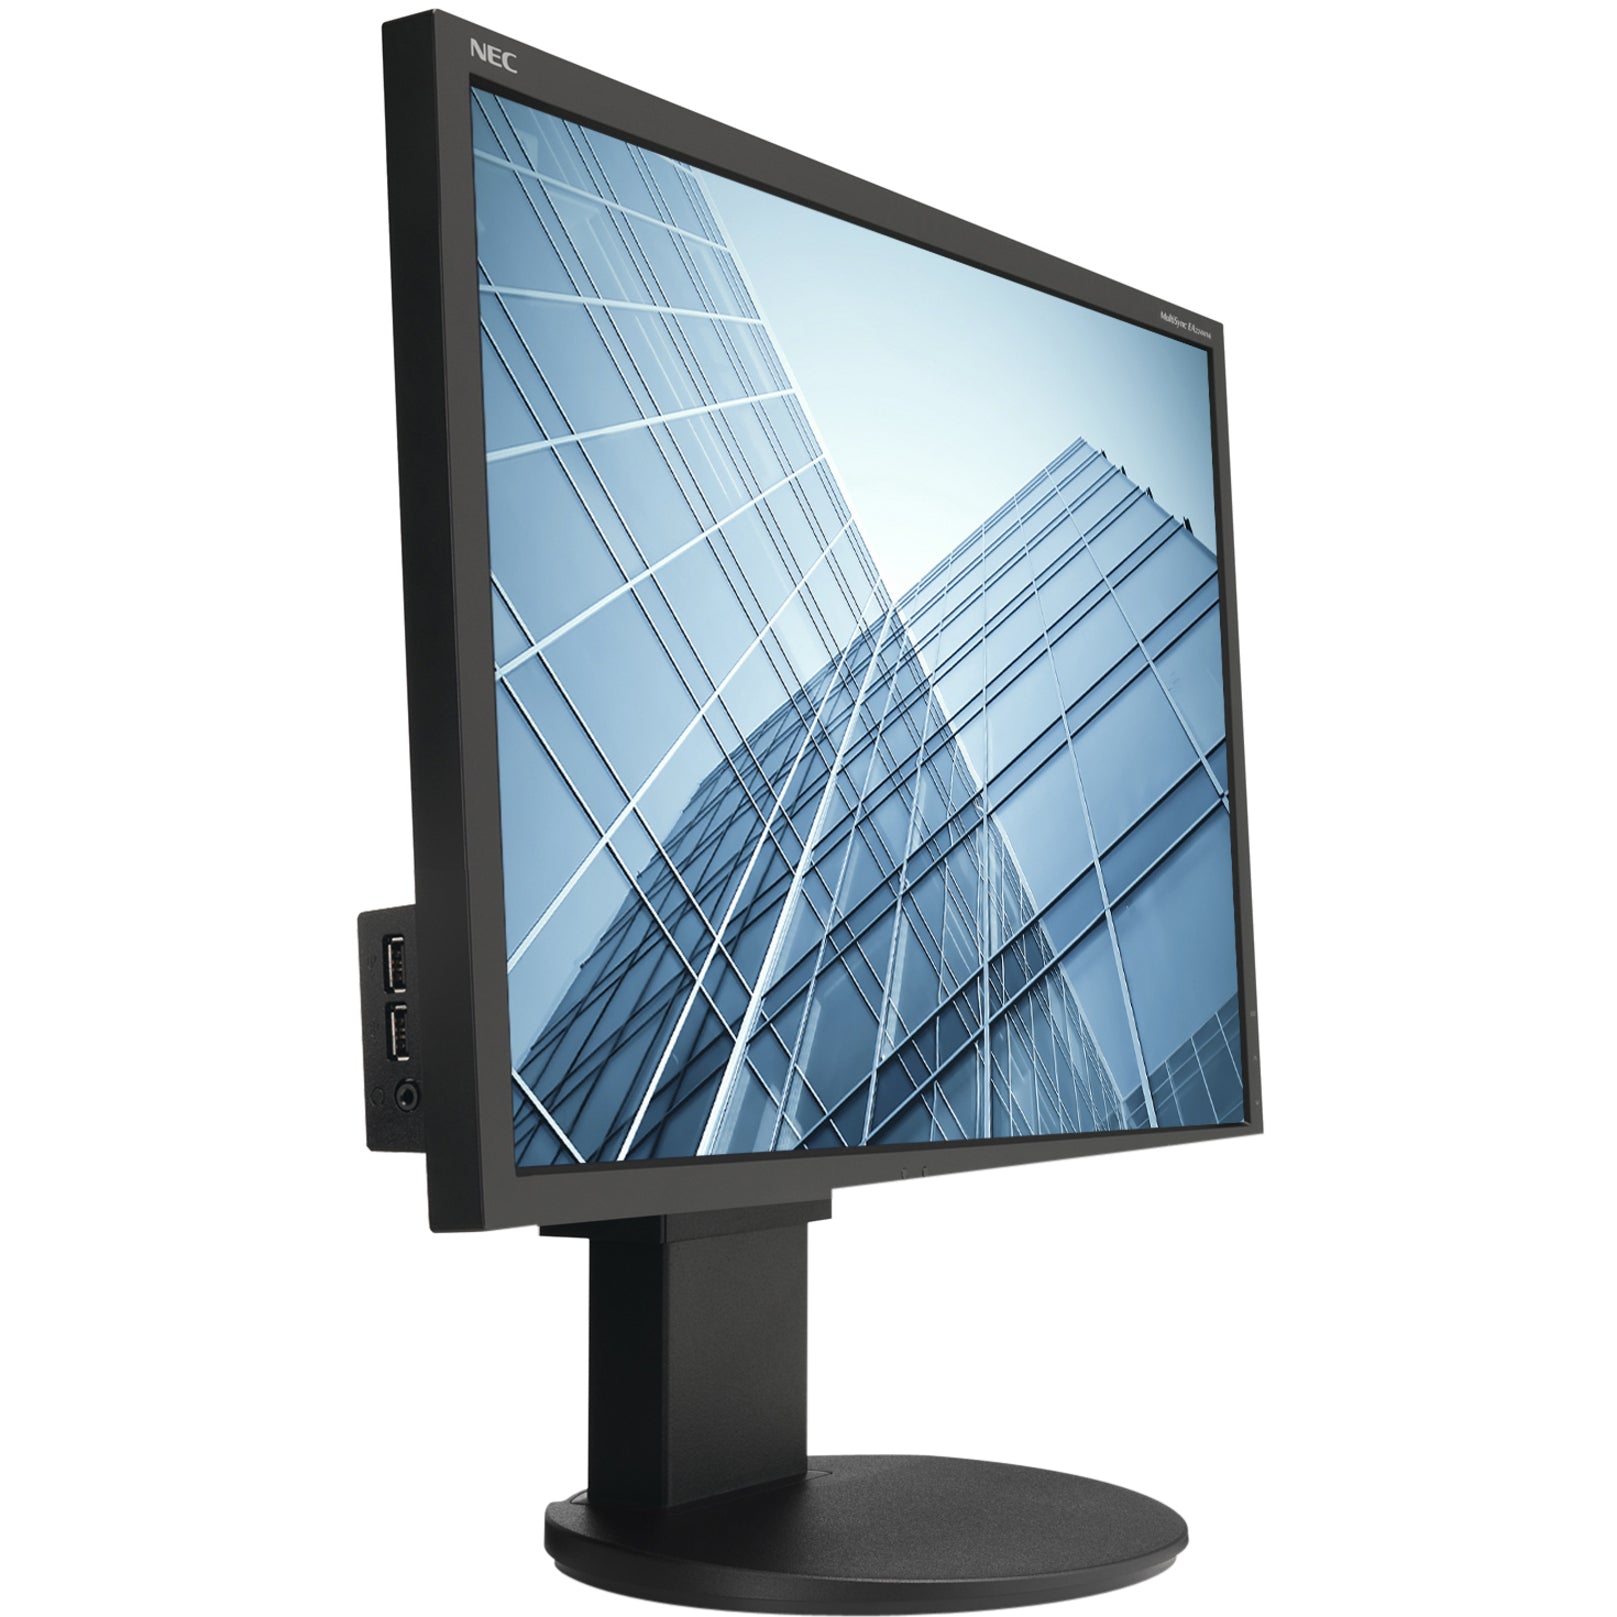 NEC Display EA224WMI-BK 22" LED-backlit Eco-Friendly Widescreen Desktop Monitor, Full HD, IPS Panel, 14ms Response Time, Black